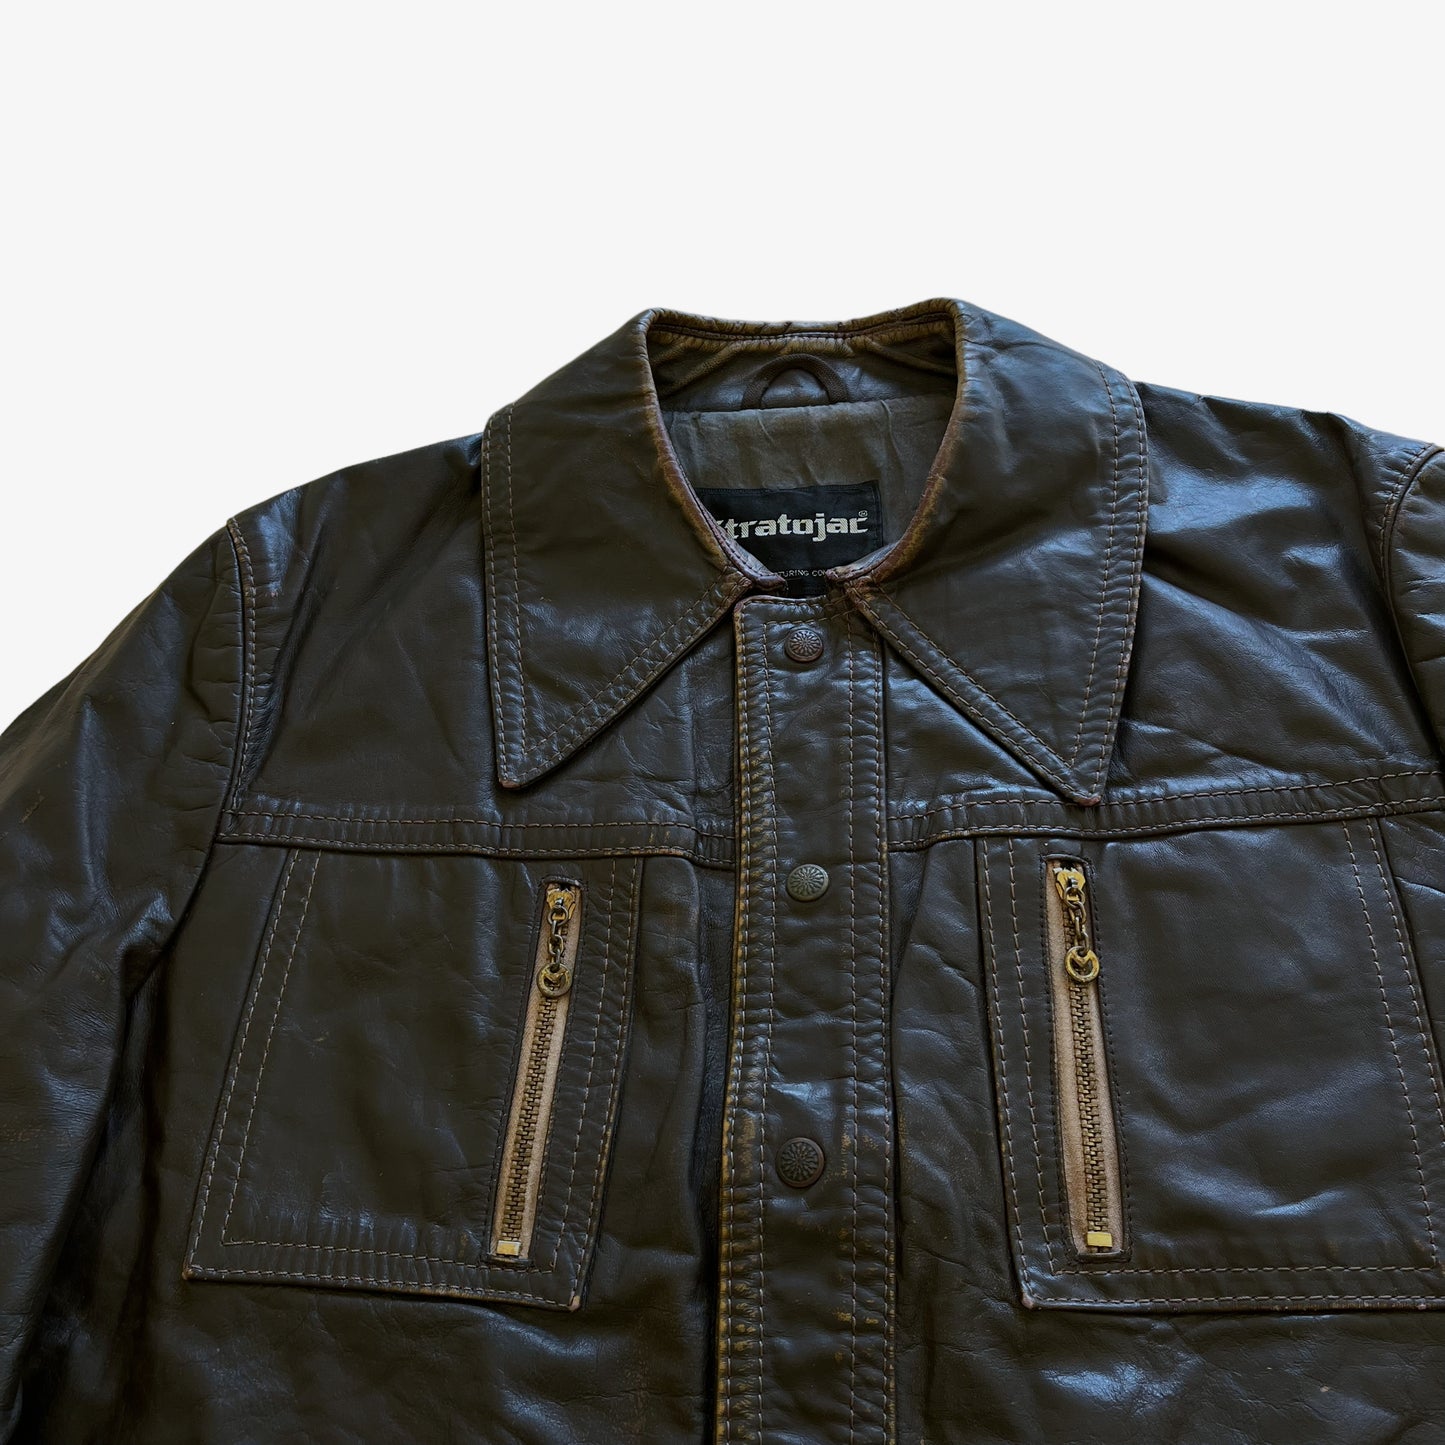 Vintage 90s Mens Stratojac Dark Brown Leather Utility Jacket Pockets - Casspios Dream